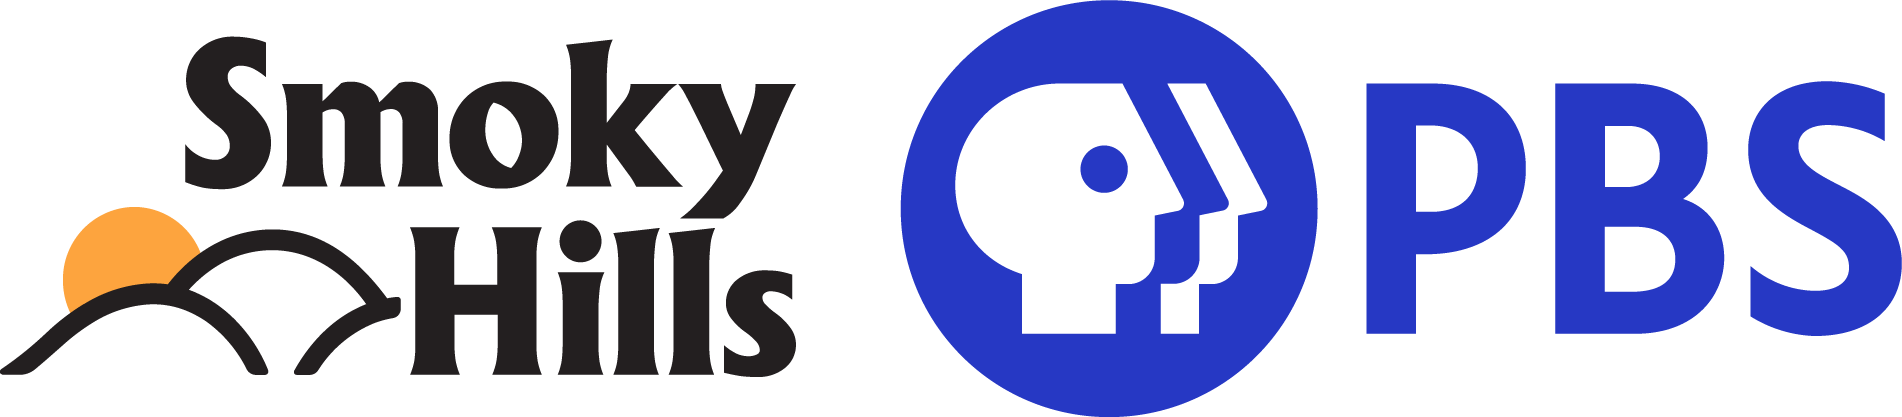 Smokey Hills Logo